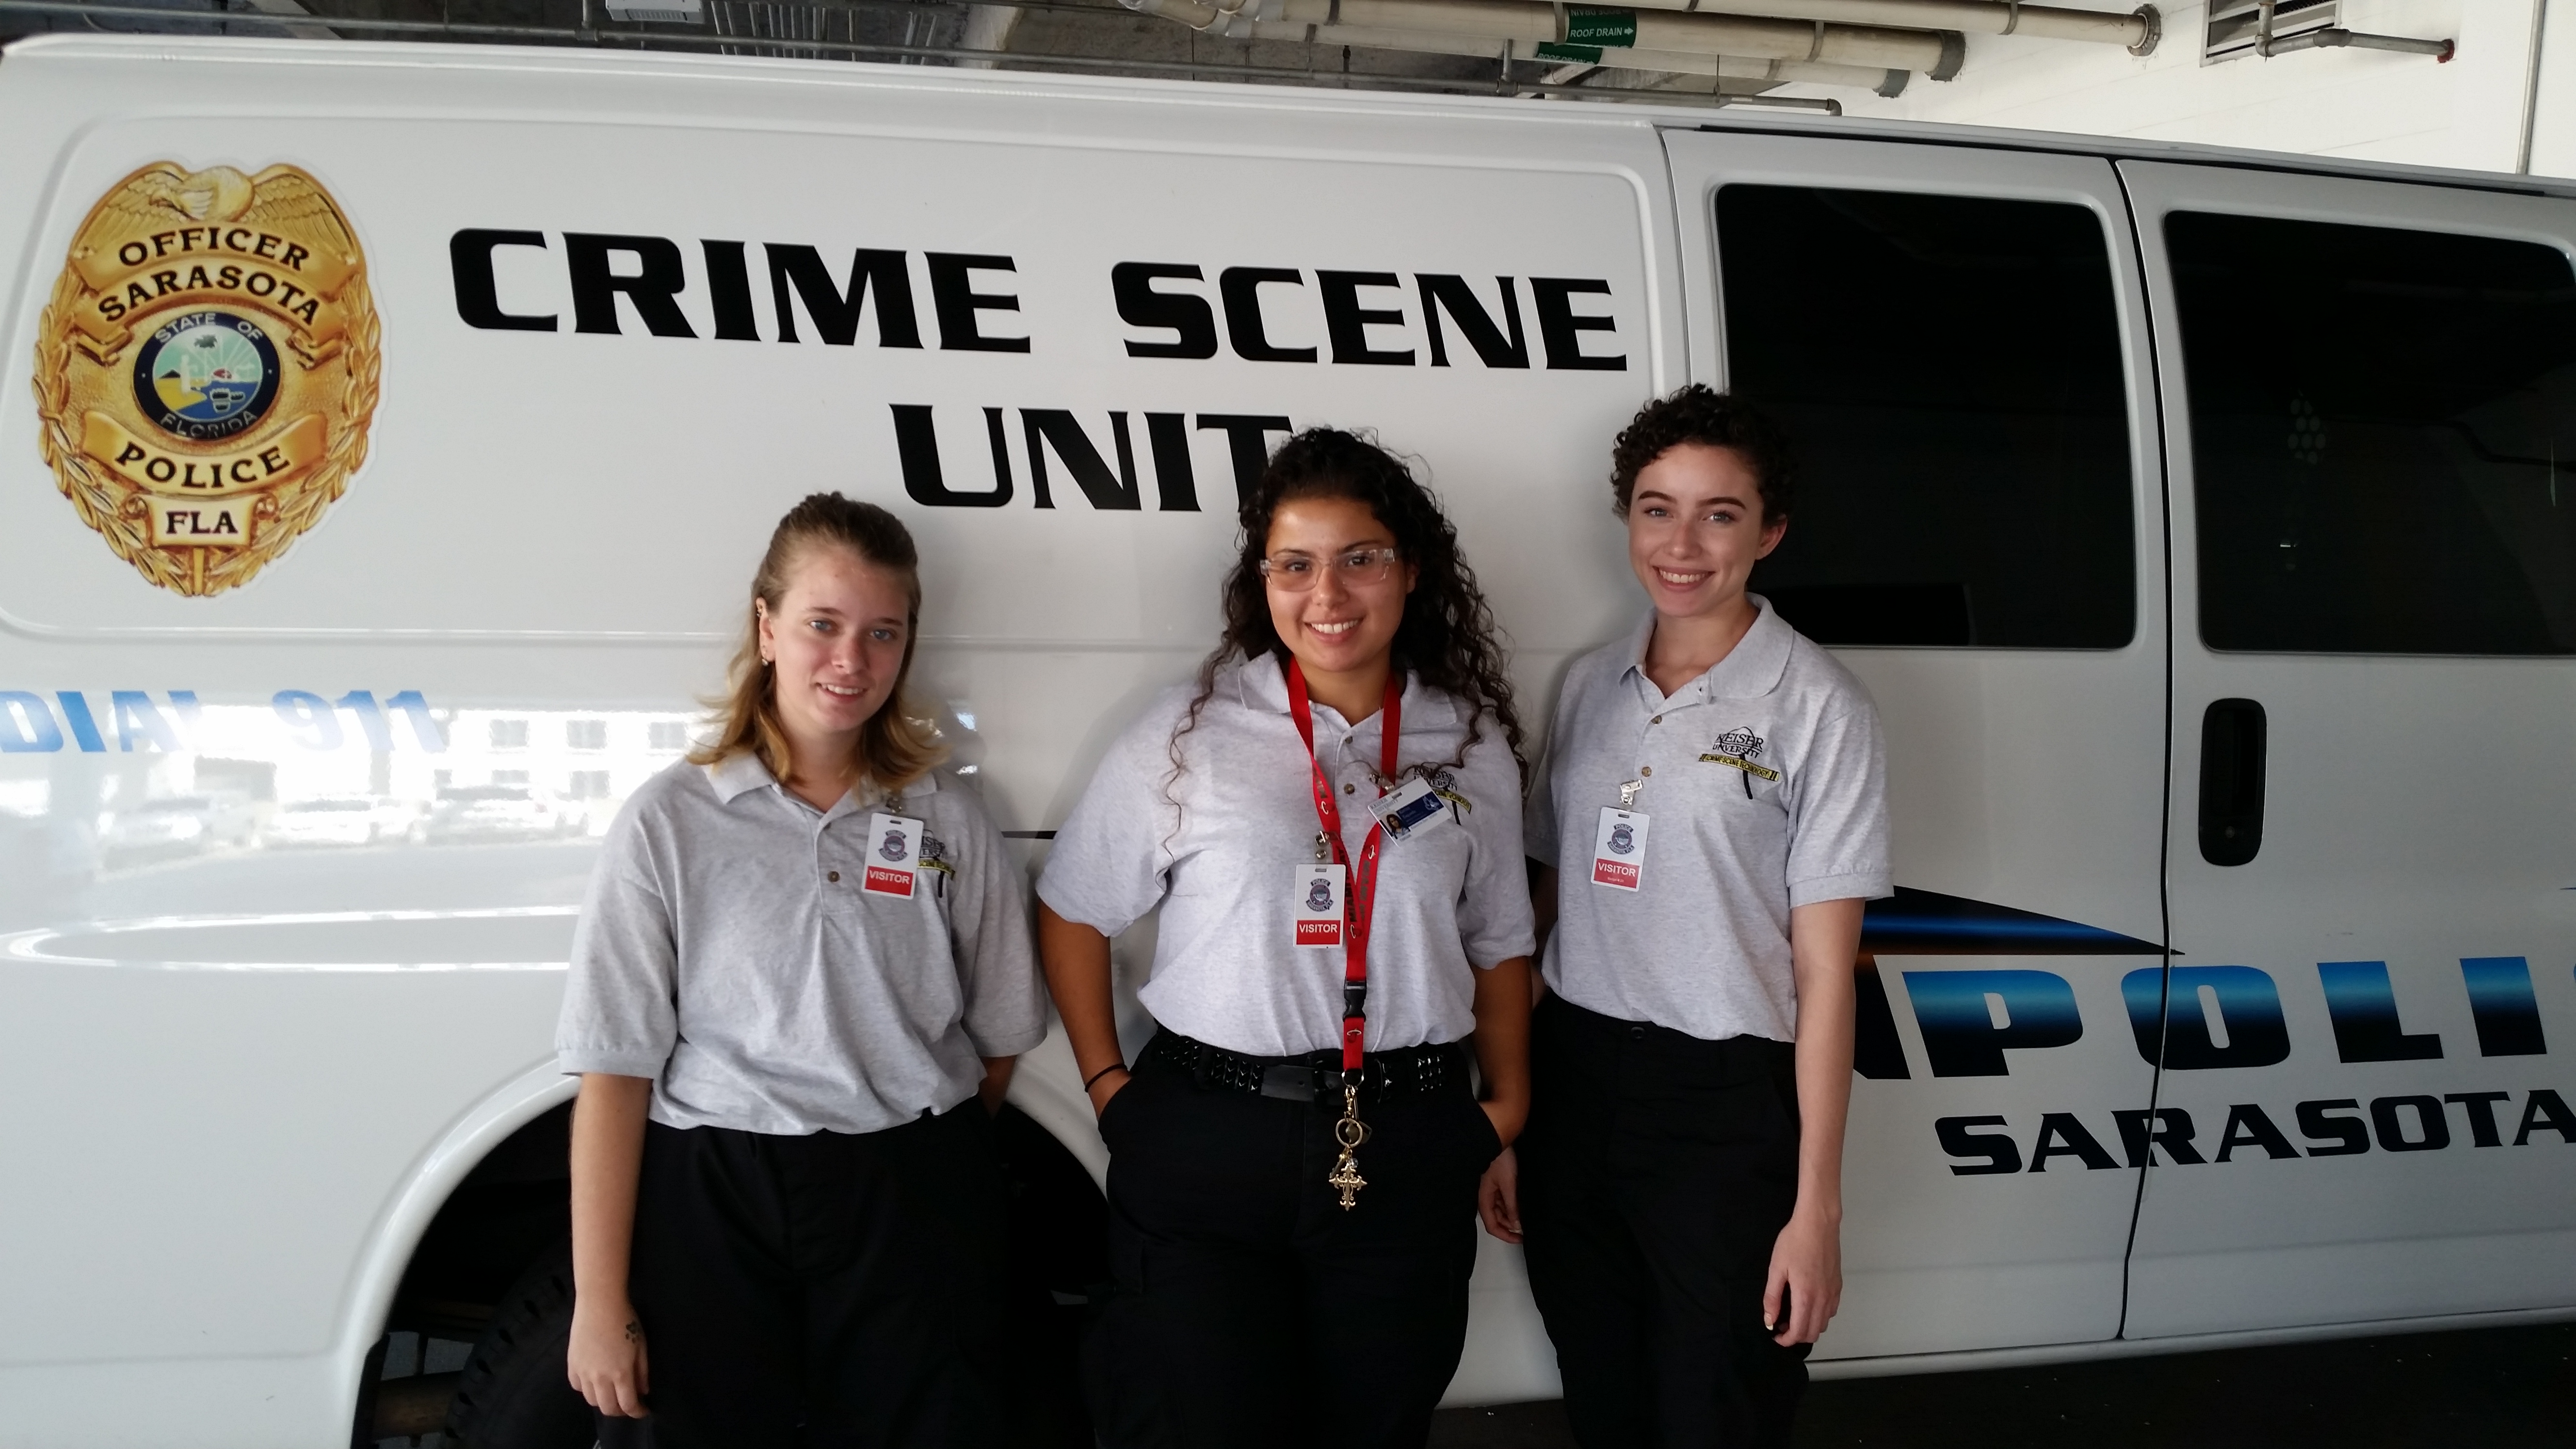 Forensic Investigation Students Visit the Sarasota PD